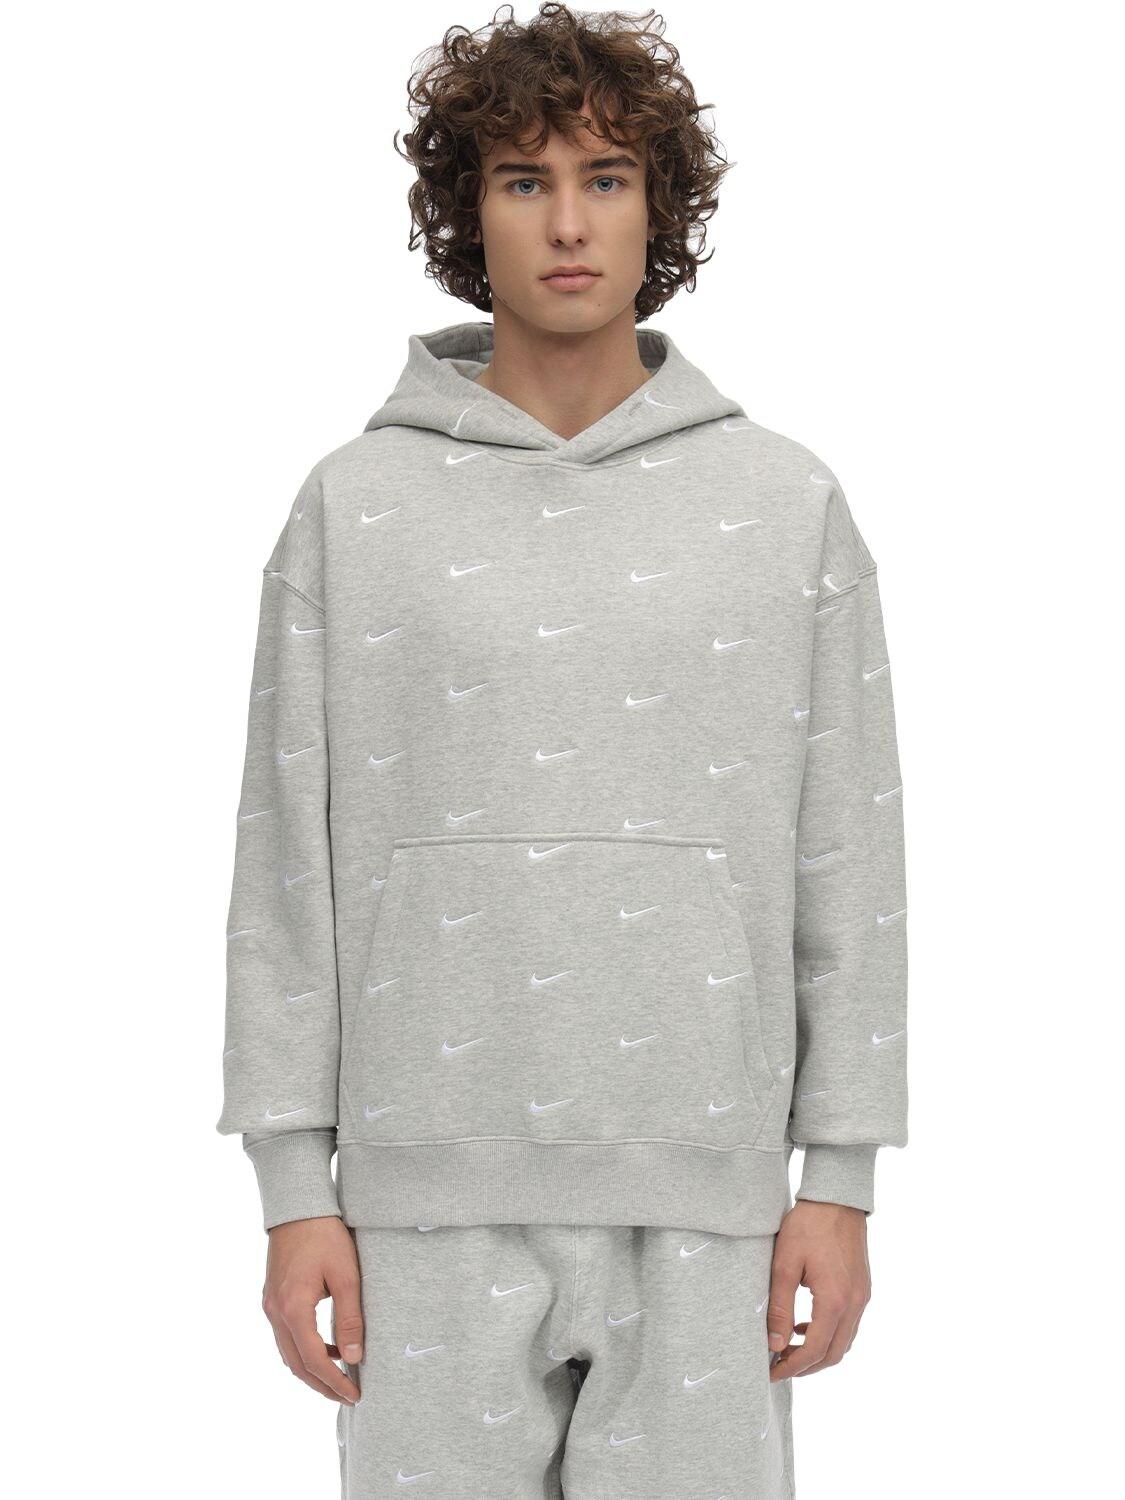 Nike Nrg Swoosh Logo Sweatshirt Hoodie in Heather Grey (Gray) for Men | Lyst